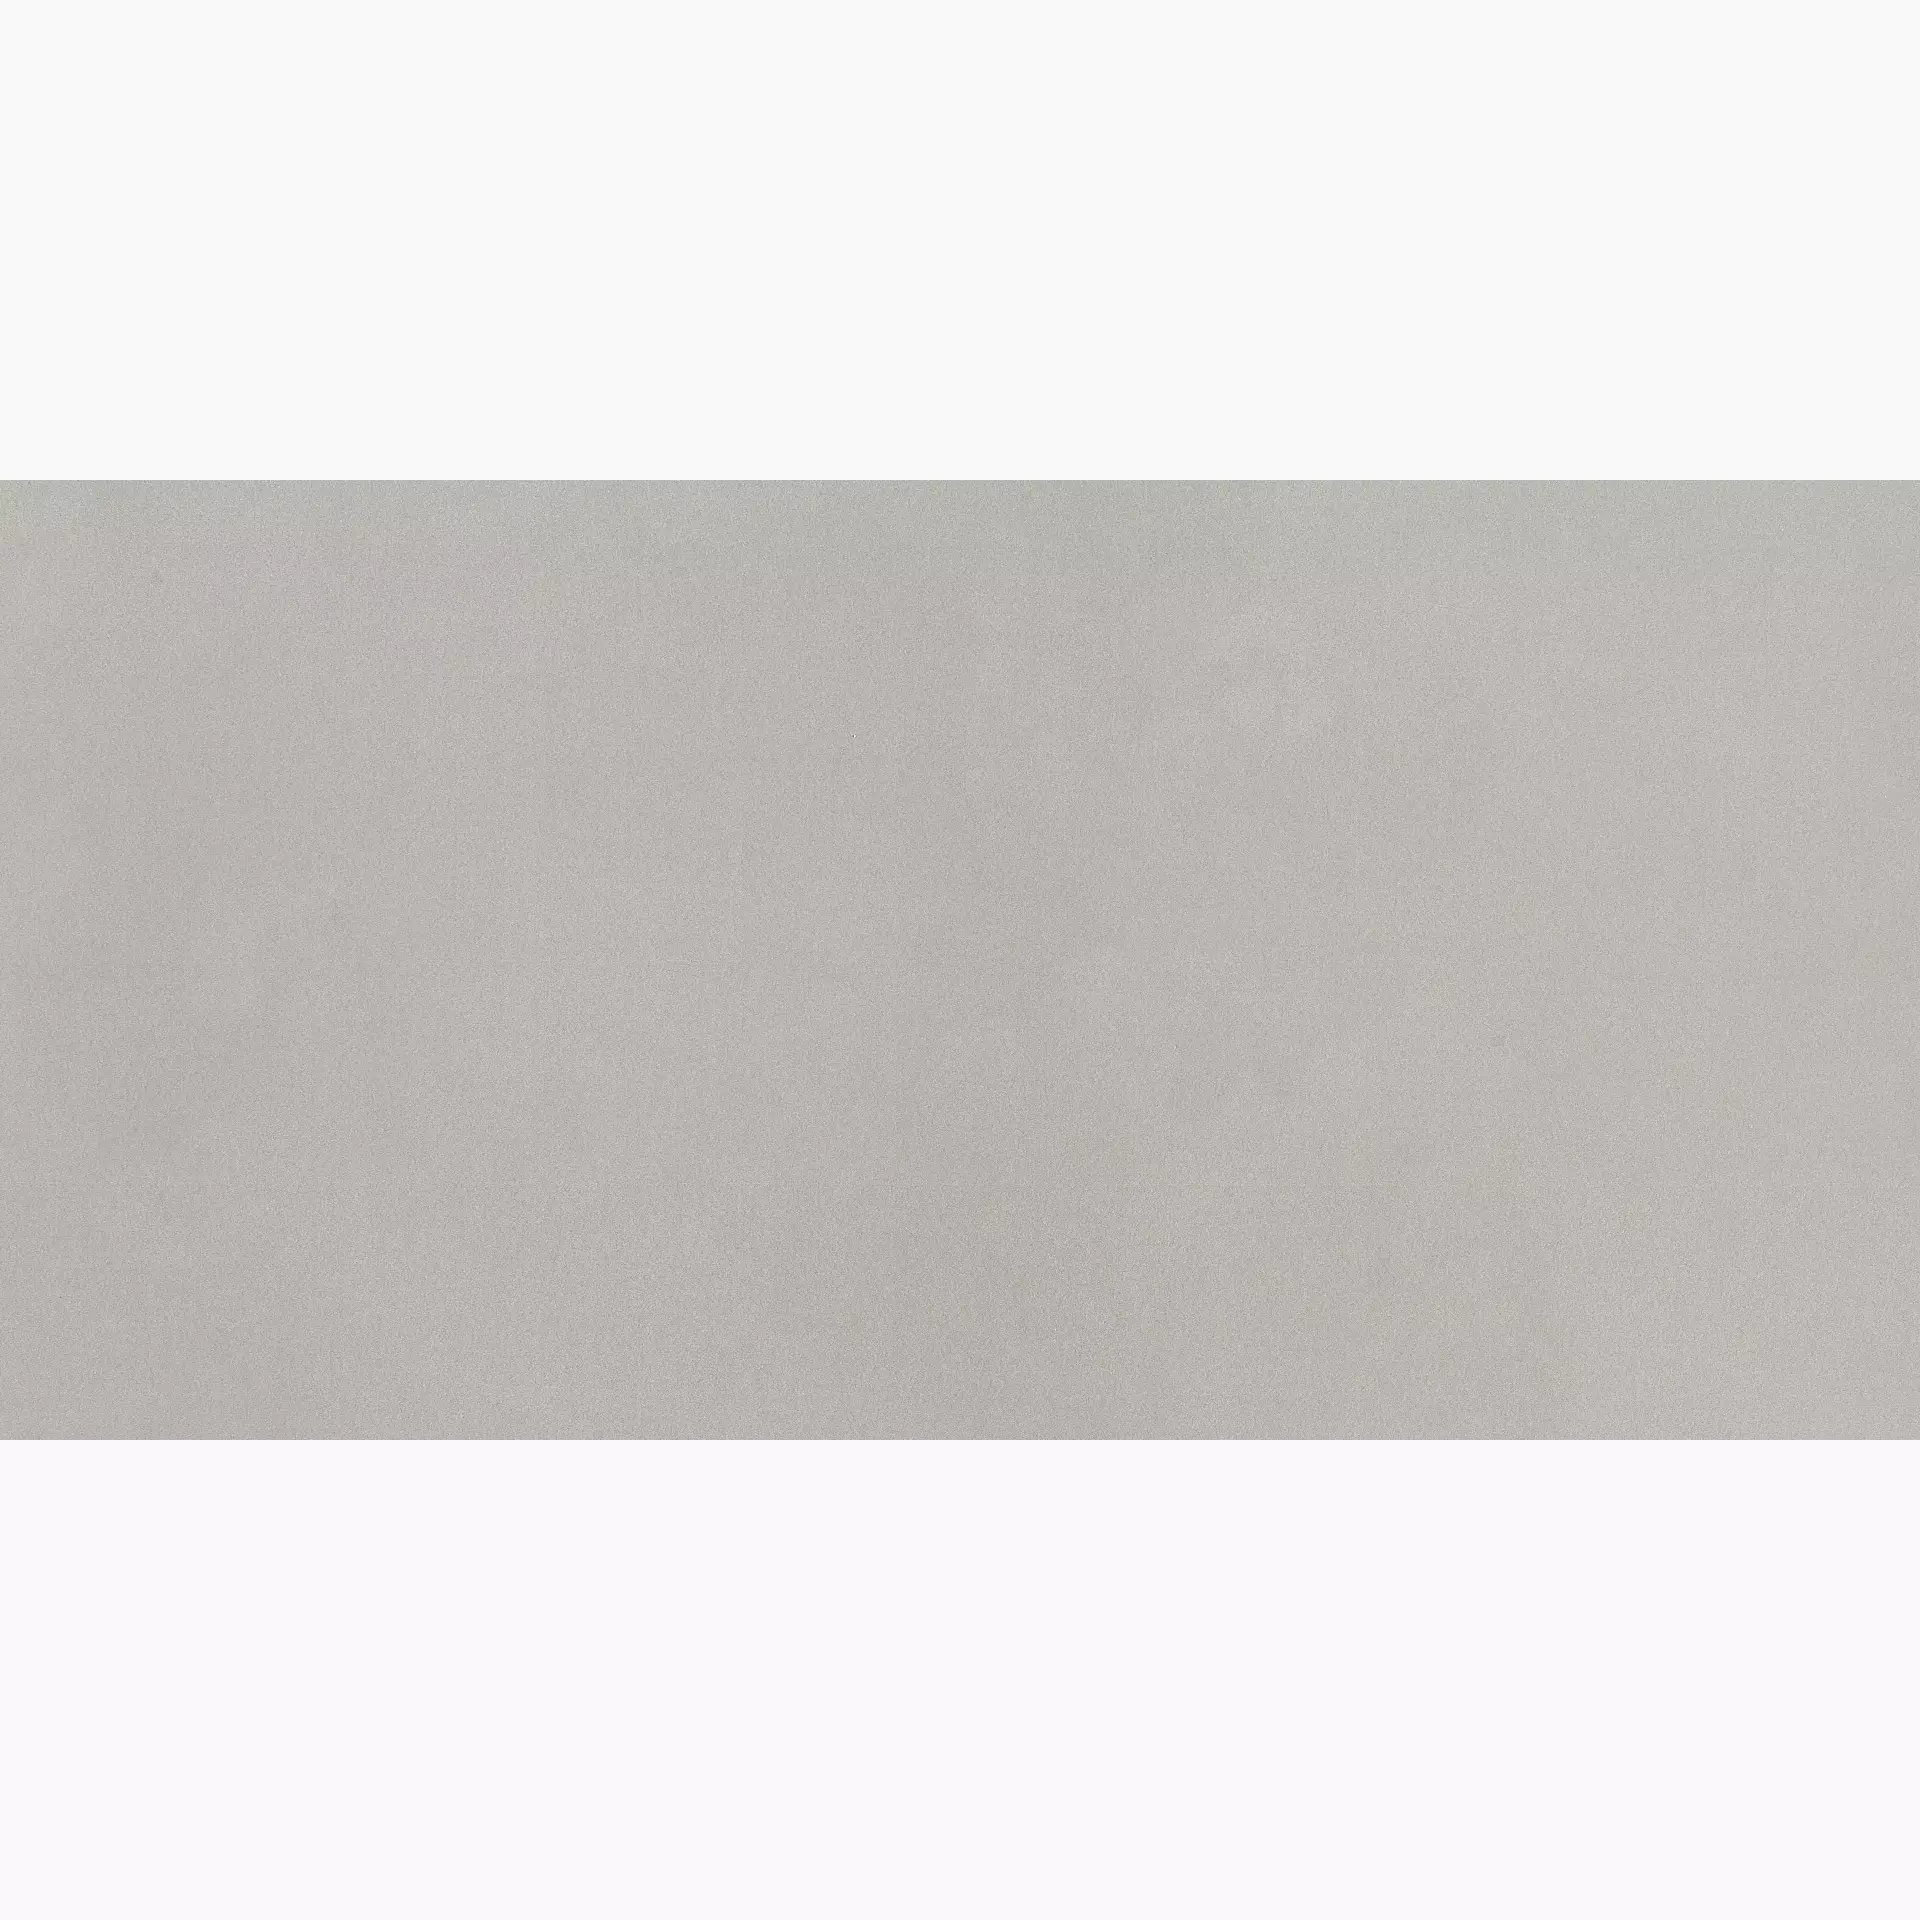 Rak Rhode Island Light Grey Natural – Matt A12GRDILLIGM0X5R 60x120cm rectified 9mm